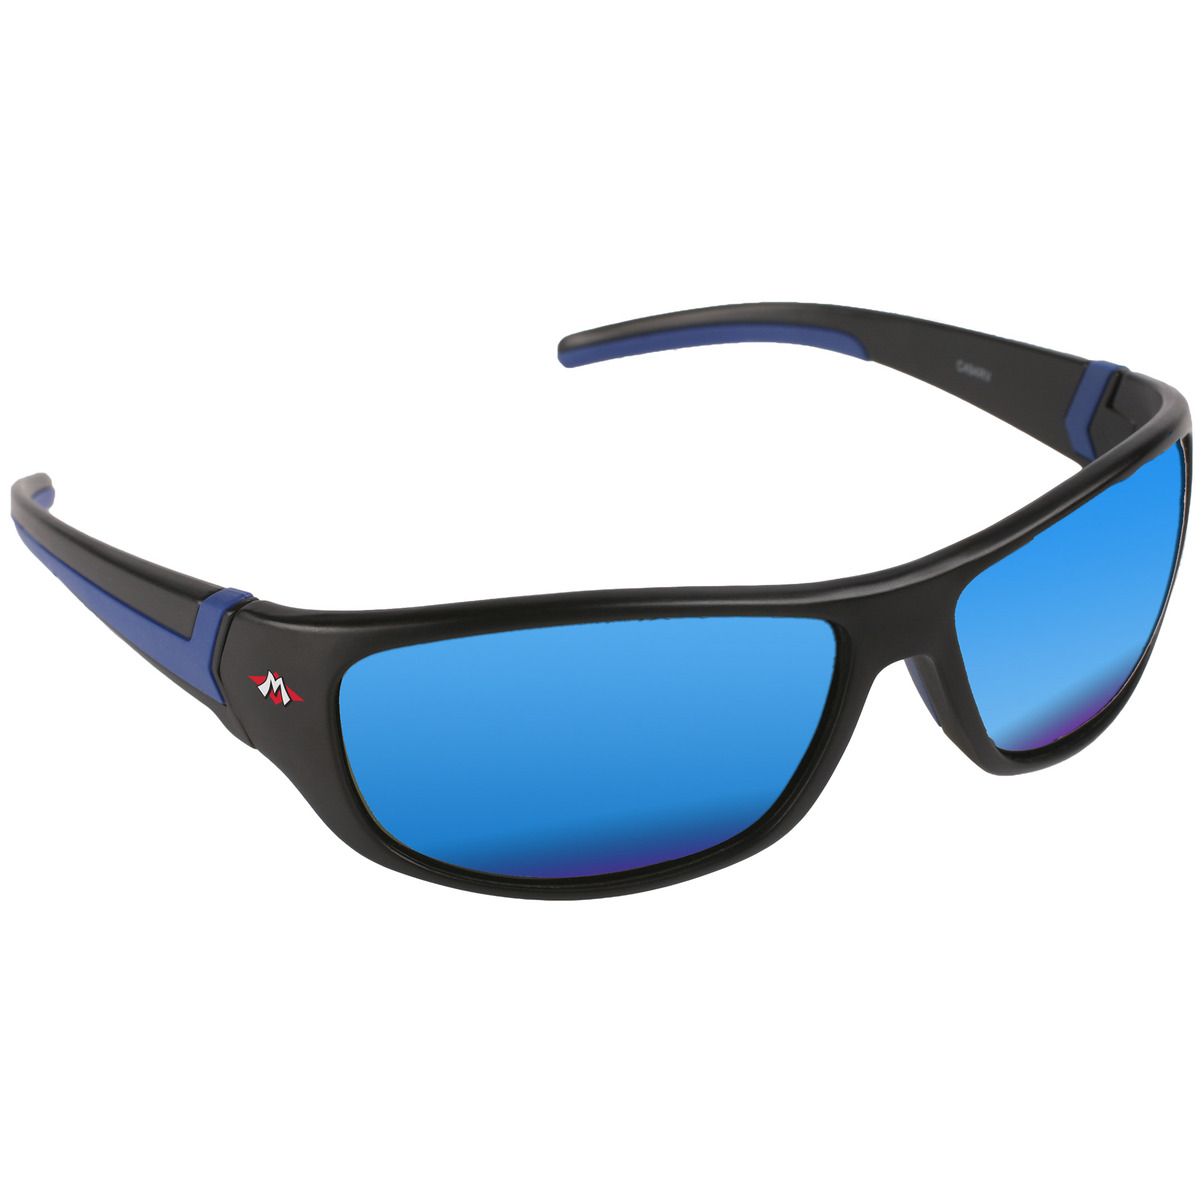 Mikado Sunglasses Polarized - 7516 BLUE AND PURPLE